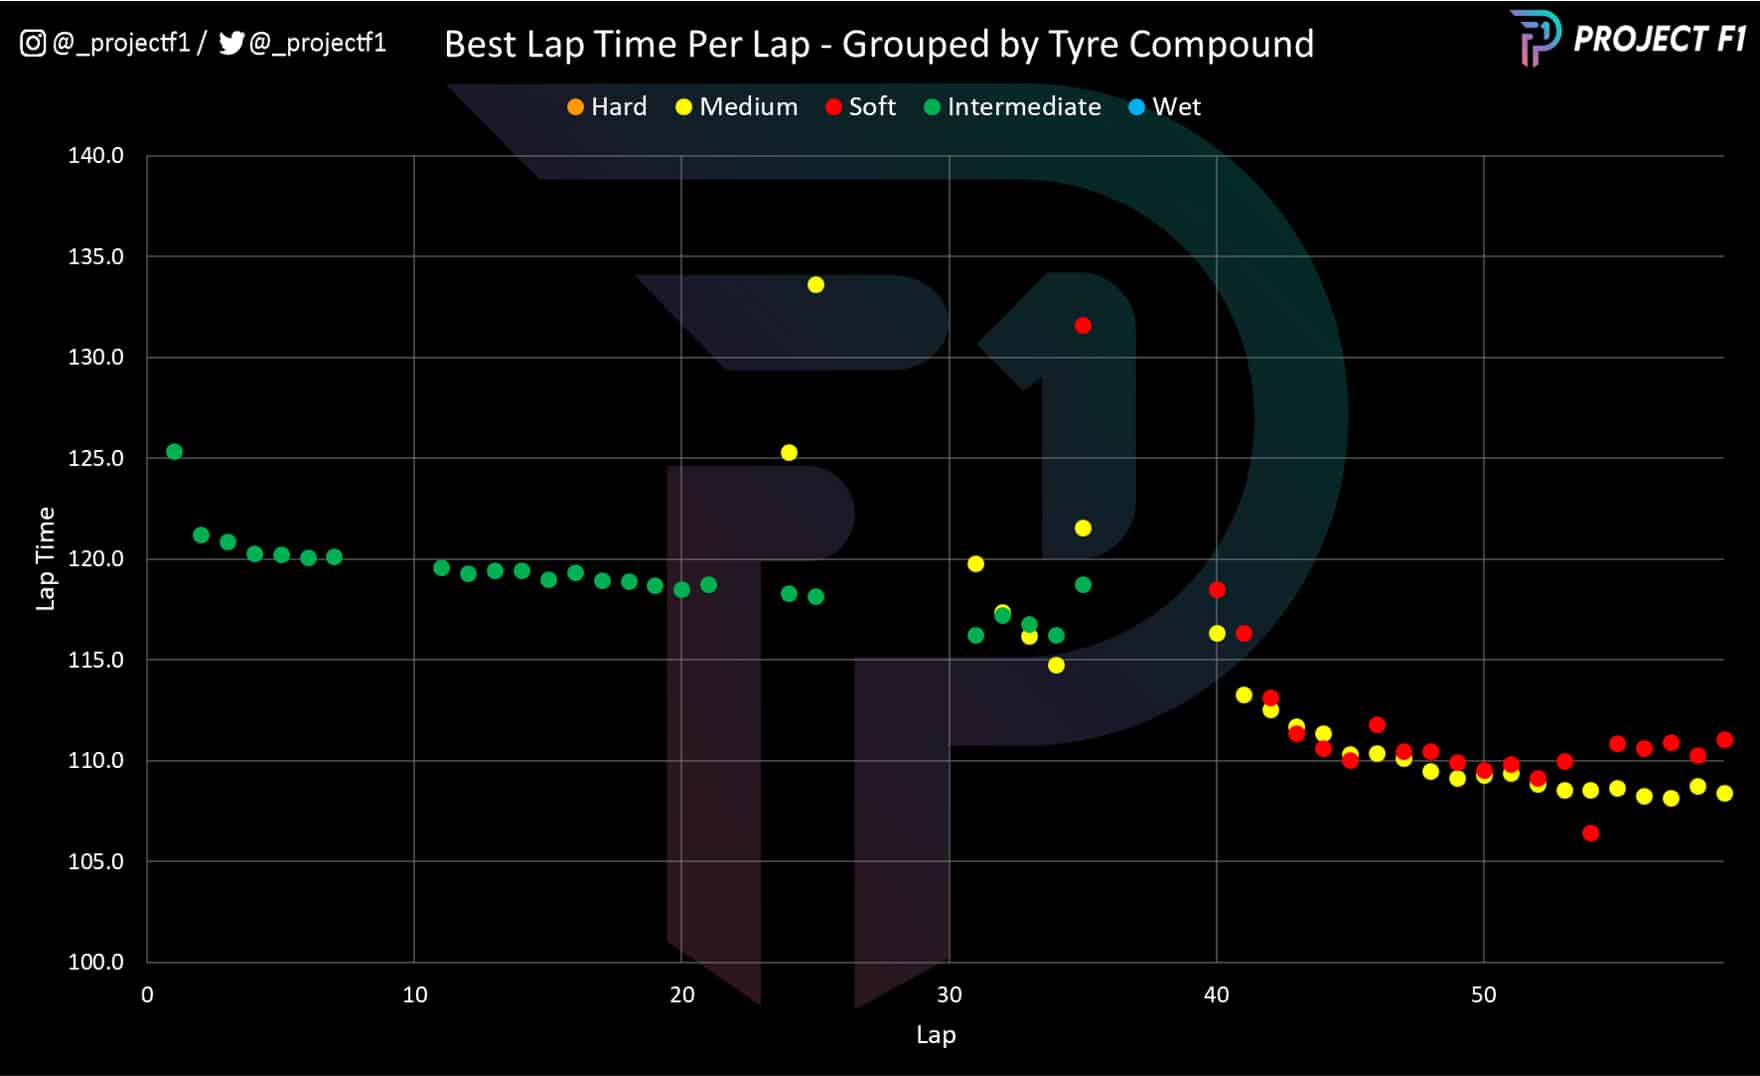 2022 Singapore GP best lap time per lap grouped by tyre compound